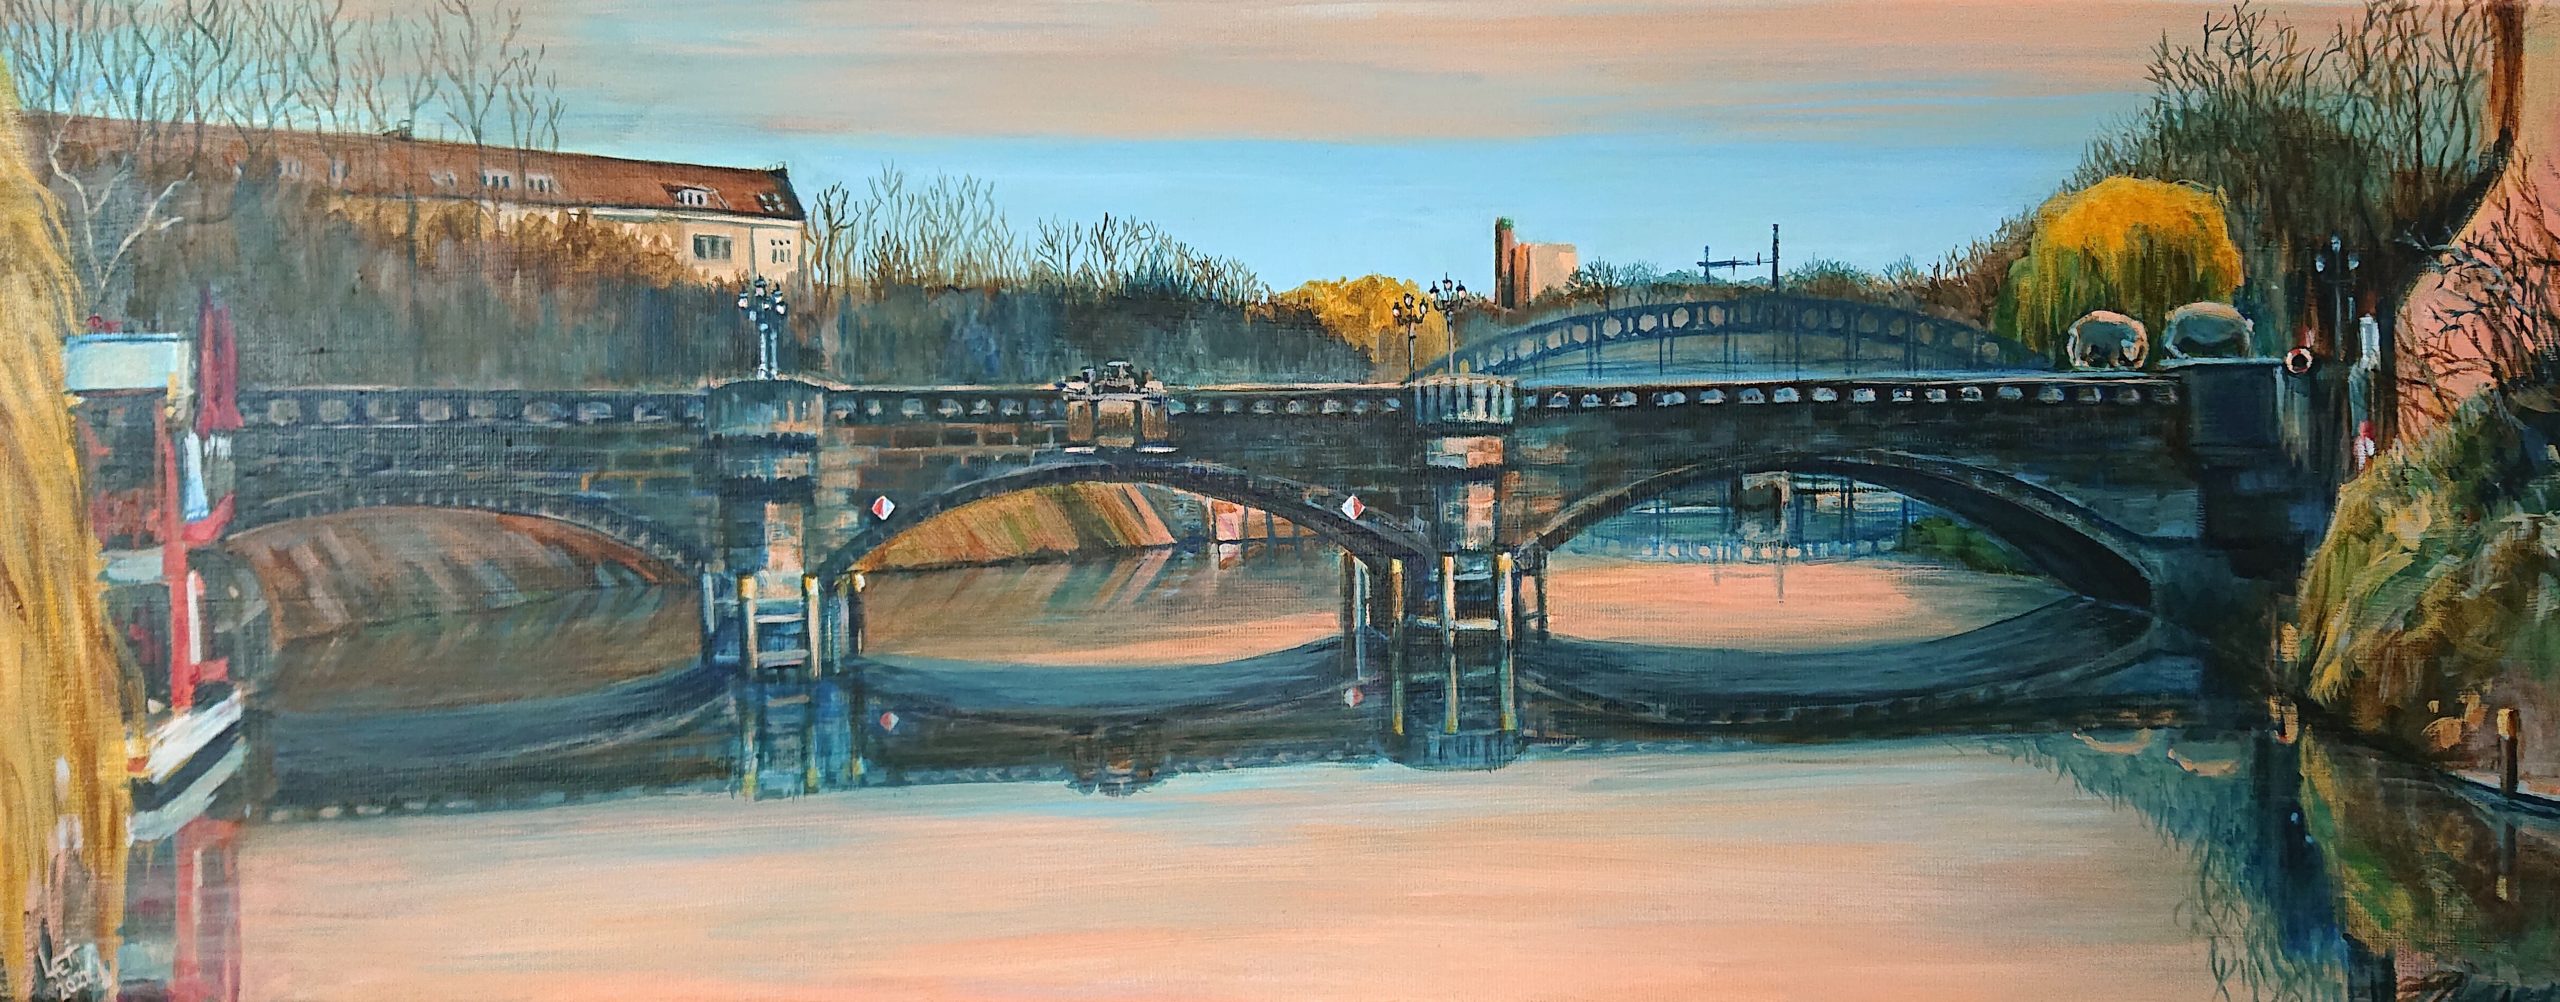 SUNSET- Reflexion Berlin - Bridge Part 3:3, panoramic Serie- acrylic painting on canvas -35 x 70 cm - 12.2021 , Laetitia Hildebrand